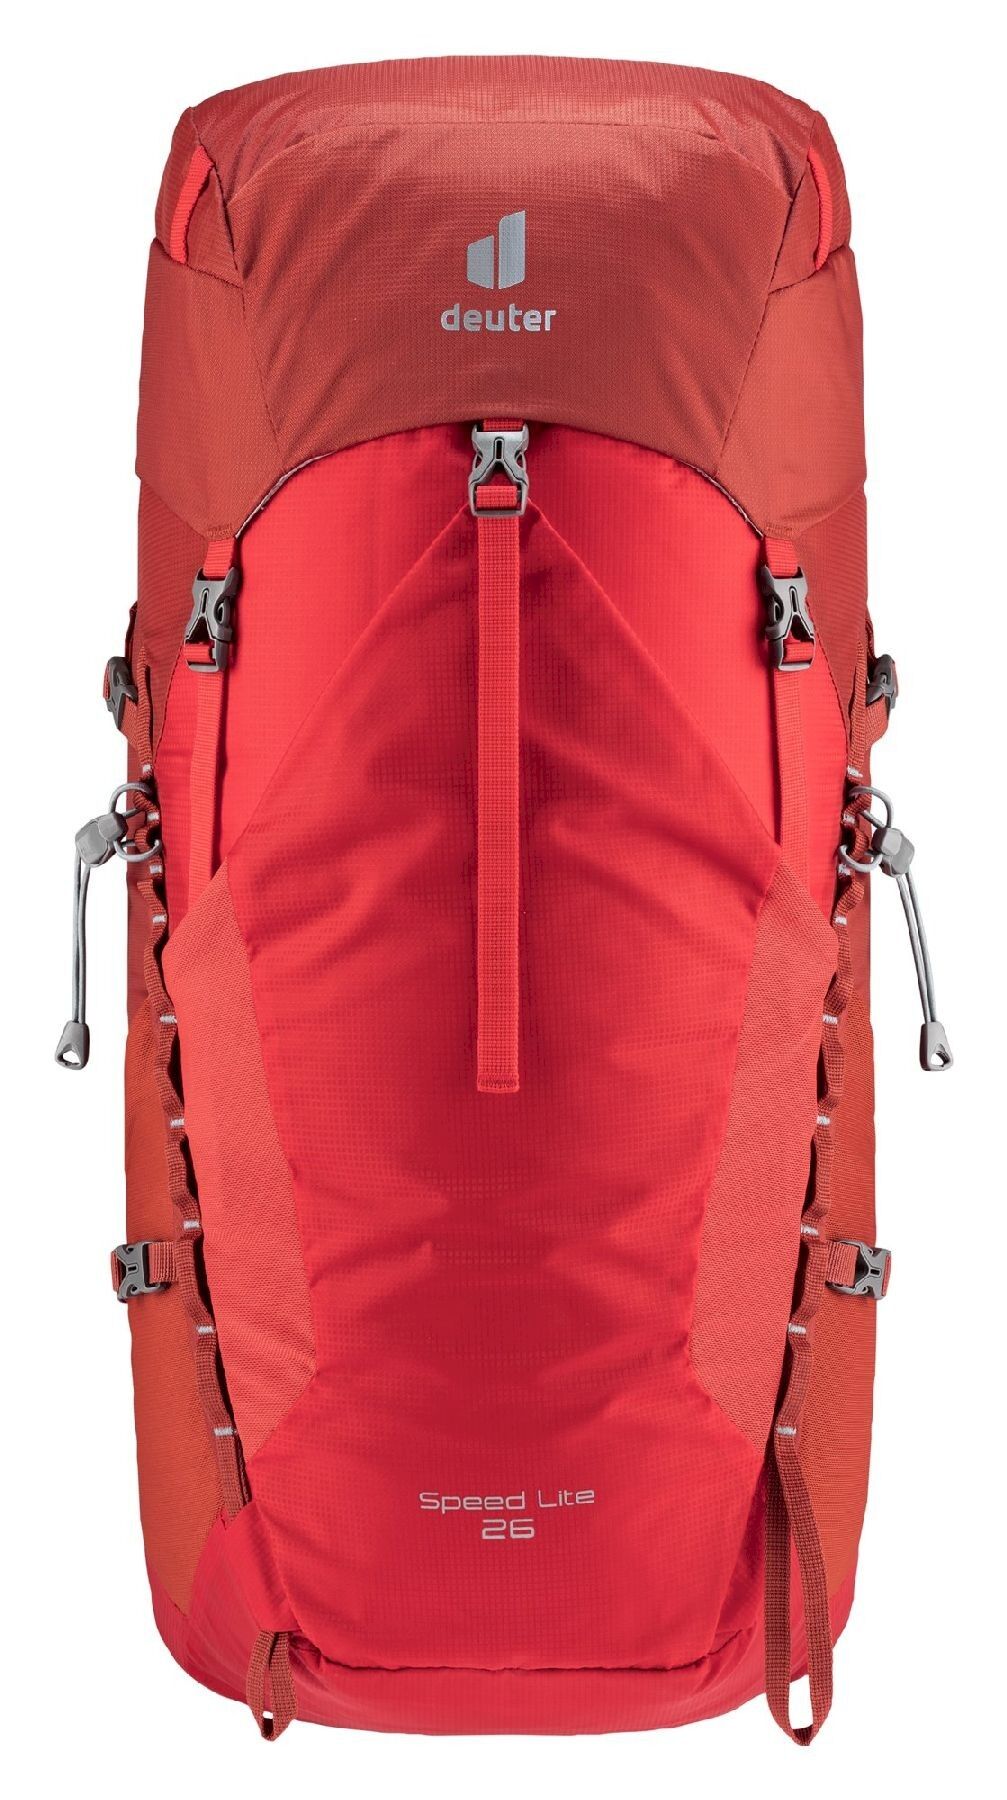 Deuter Speed Lite 26 - Walking backpack - Men's